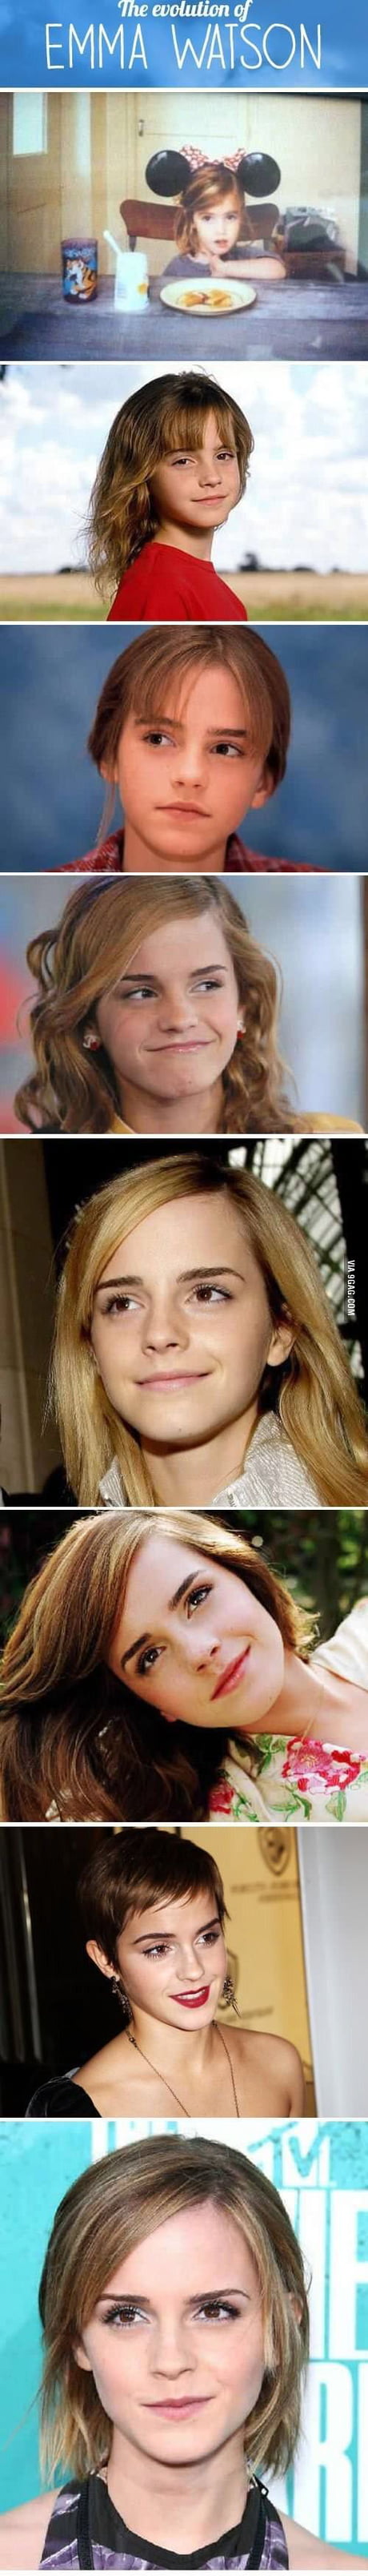 The Evolution Of Emma Watson - 9GAG